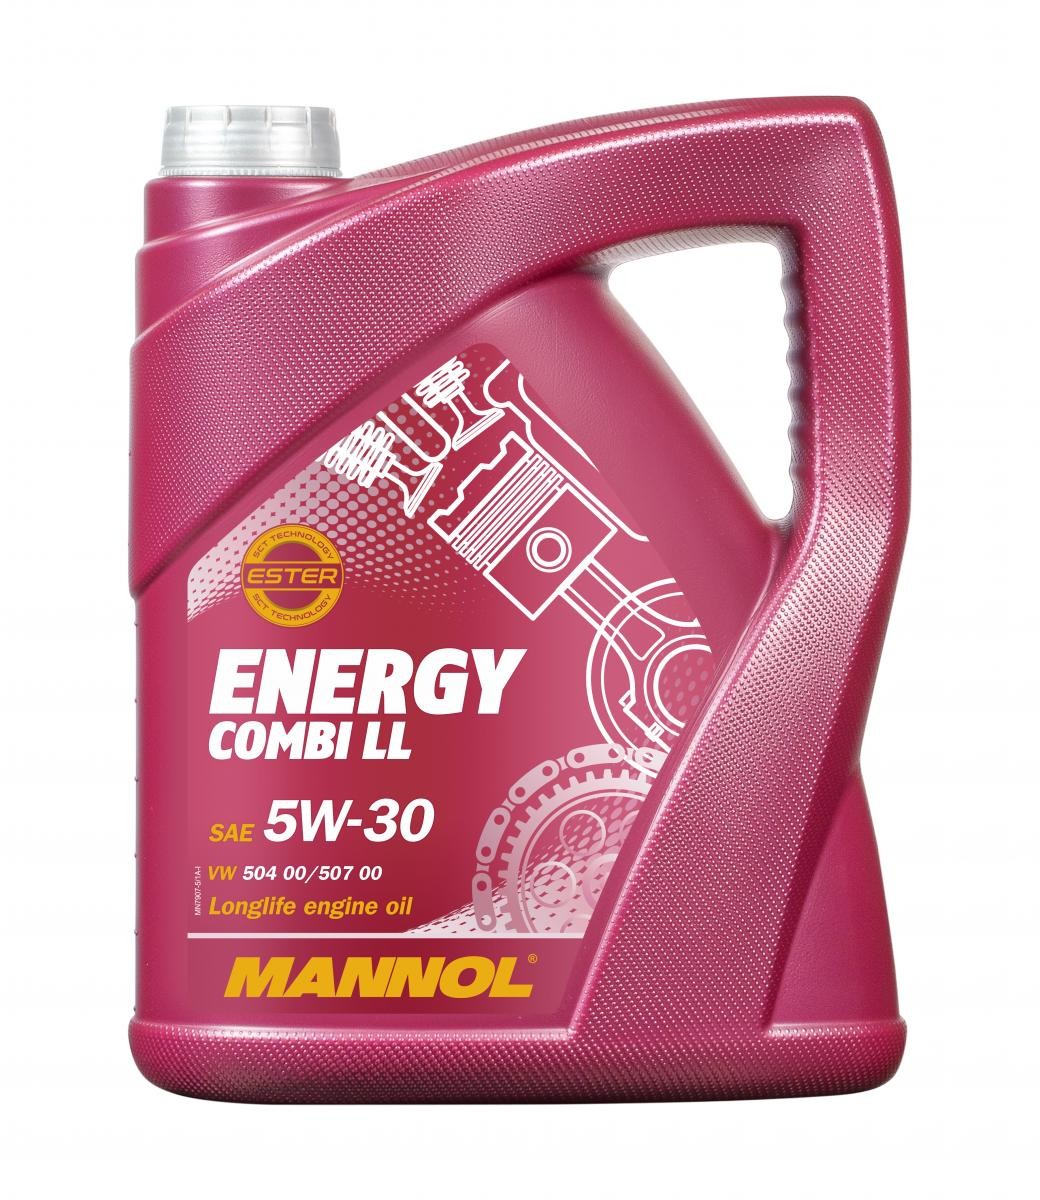 5W30 MANNOL ENERGY COMBI LL 5W-30, 5l Motoröl MN7907-5 günstig kaufen